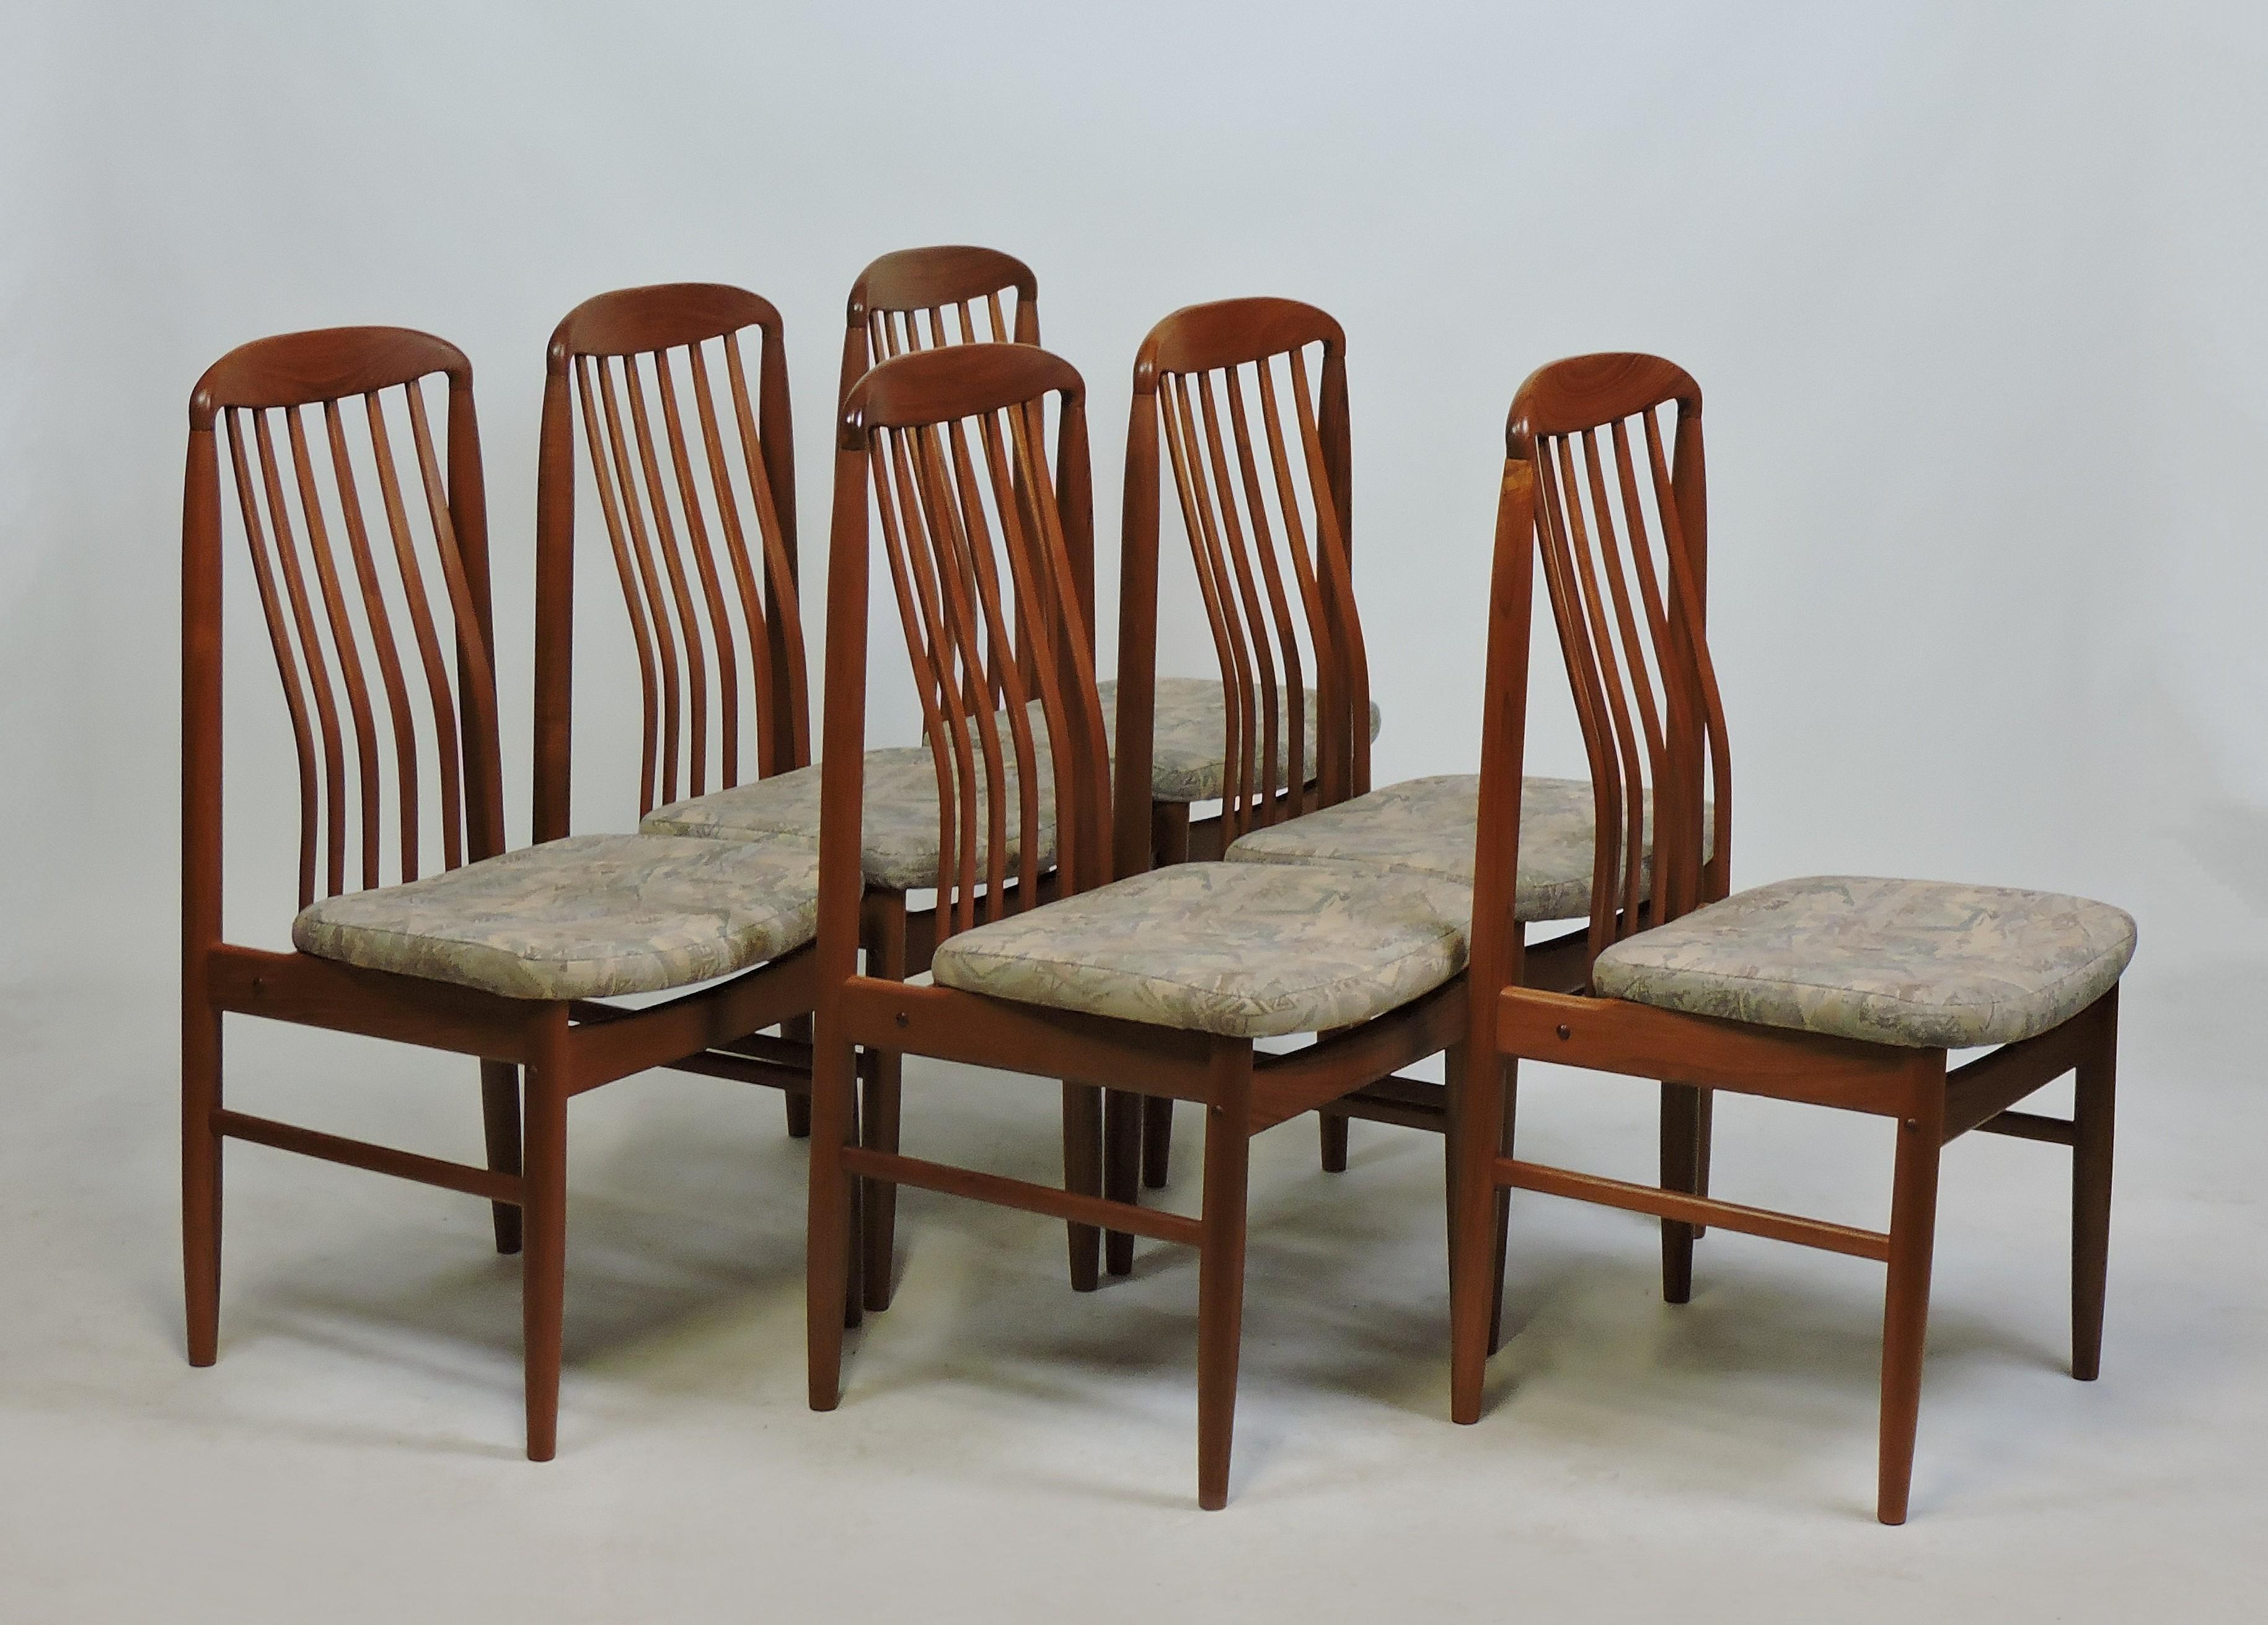 benny linden design chairs